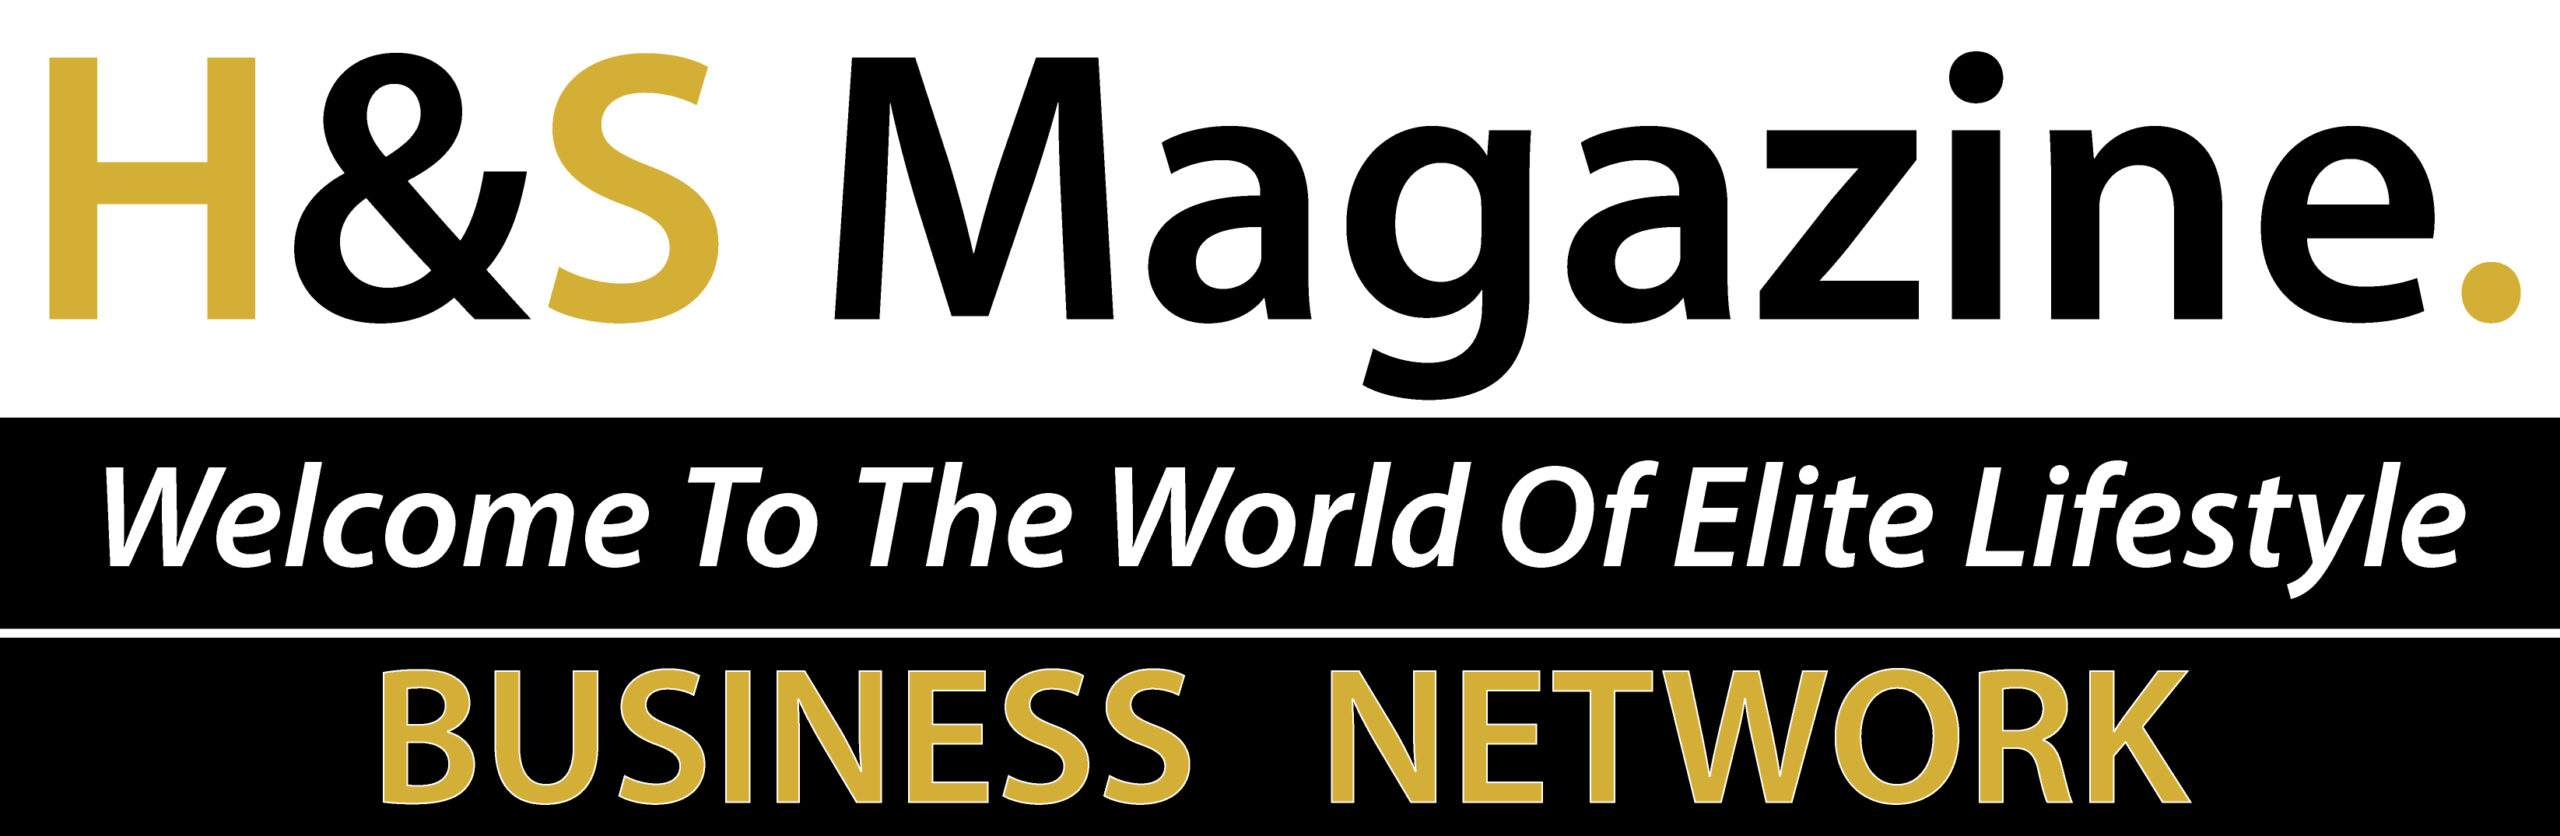 H&S Magazine Kenya Business Network